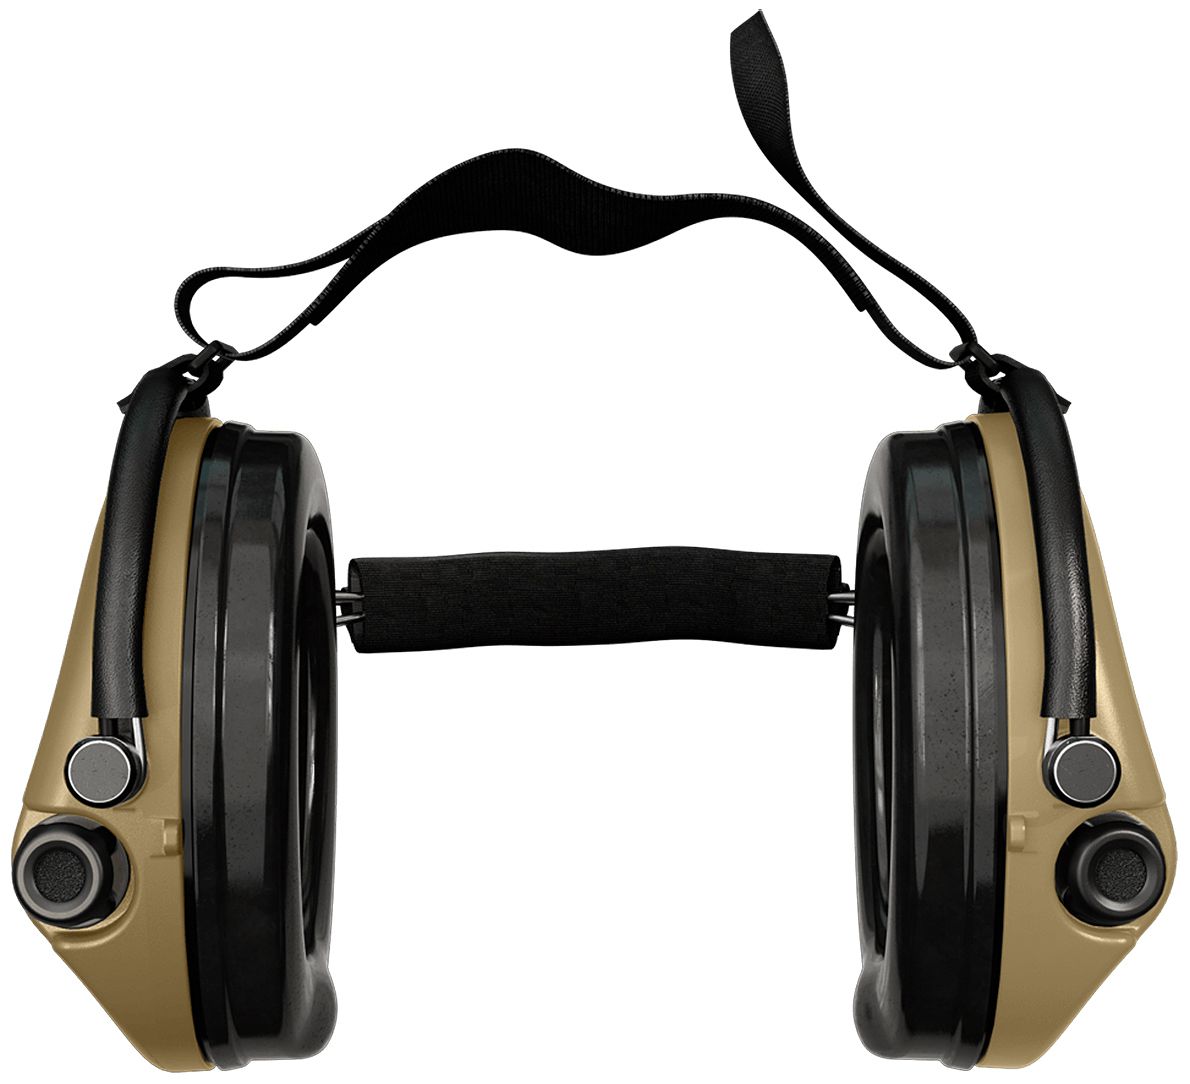 Sordin Supreme MIL AUX Gehörschutz - aktiver Militär-Gehörschützer - AUX-Anschluss, Neckband & beige Kapsel